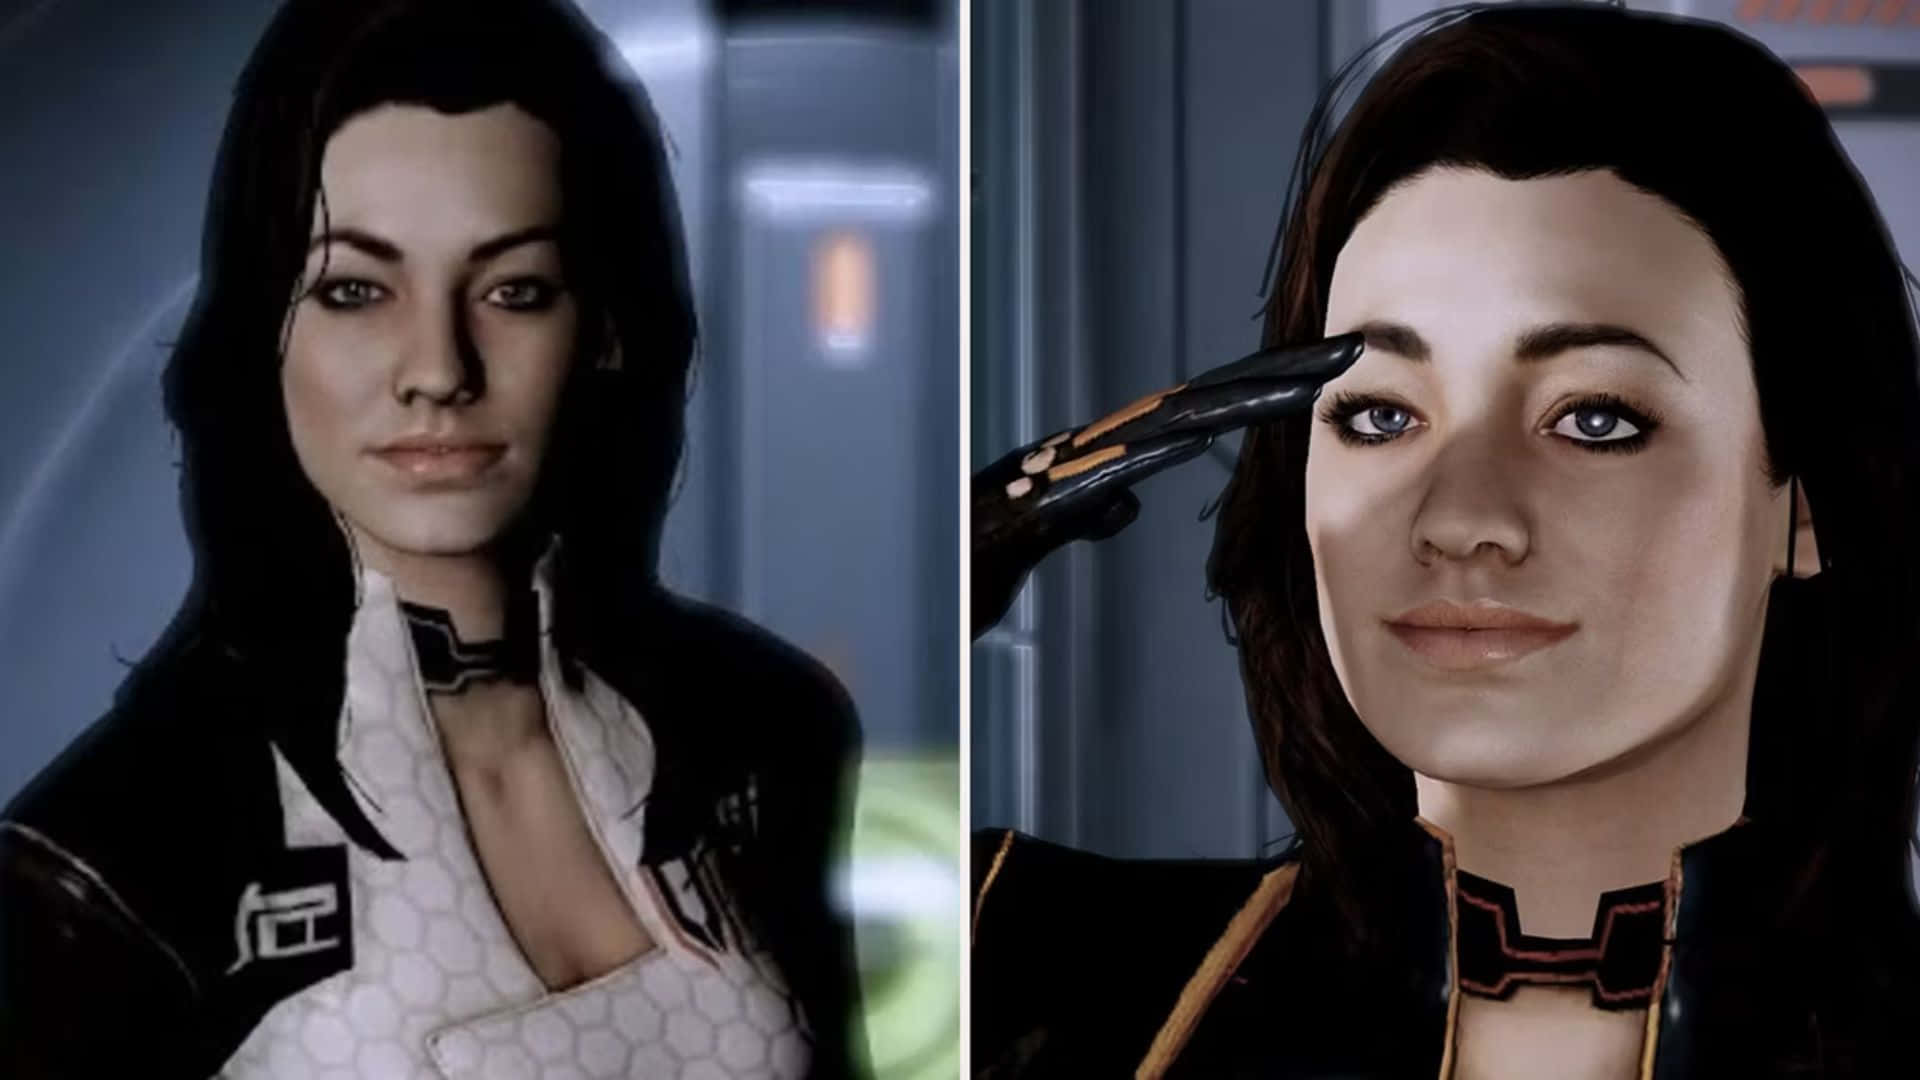 Miranda Lawson - The Powerful Biotic from Mass Effect Wallpaper